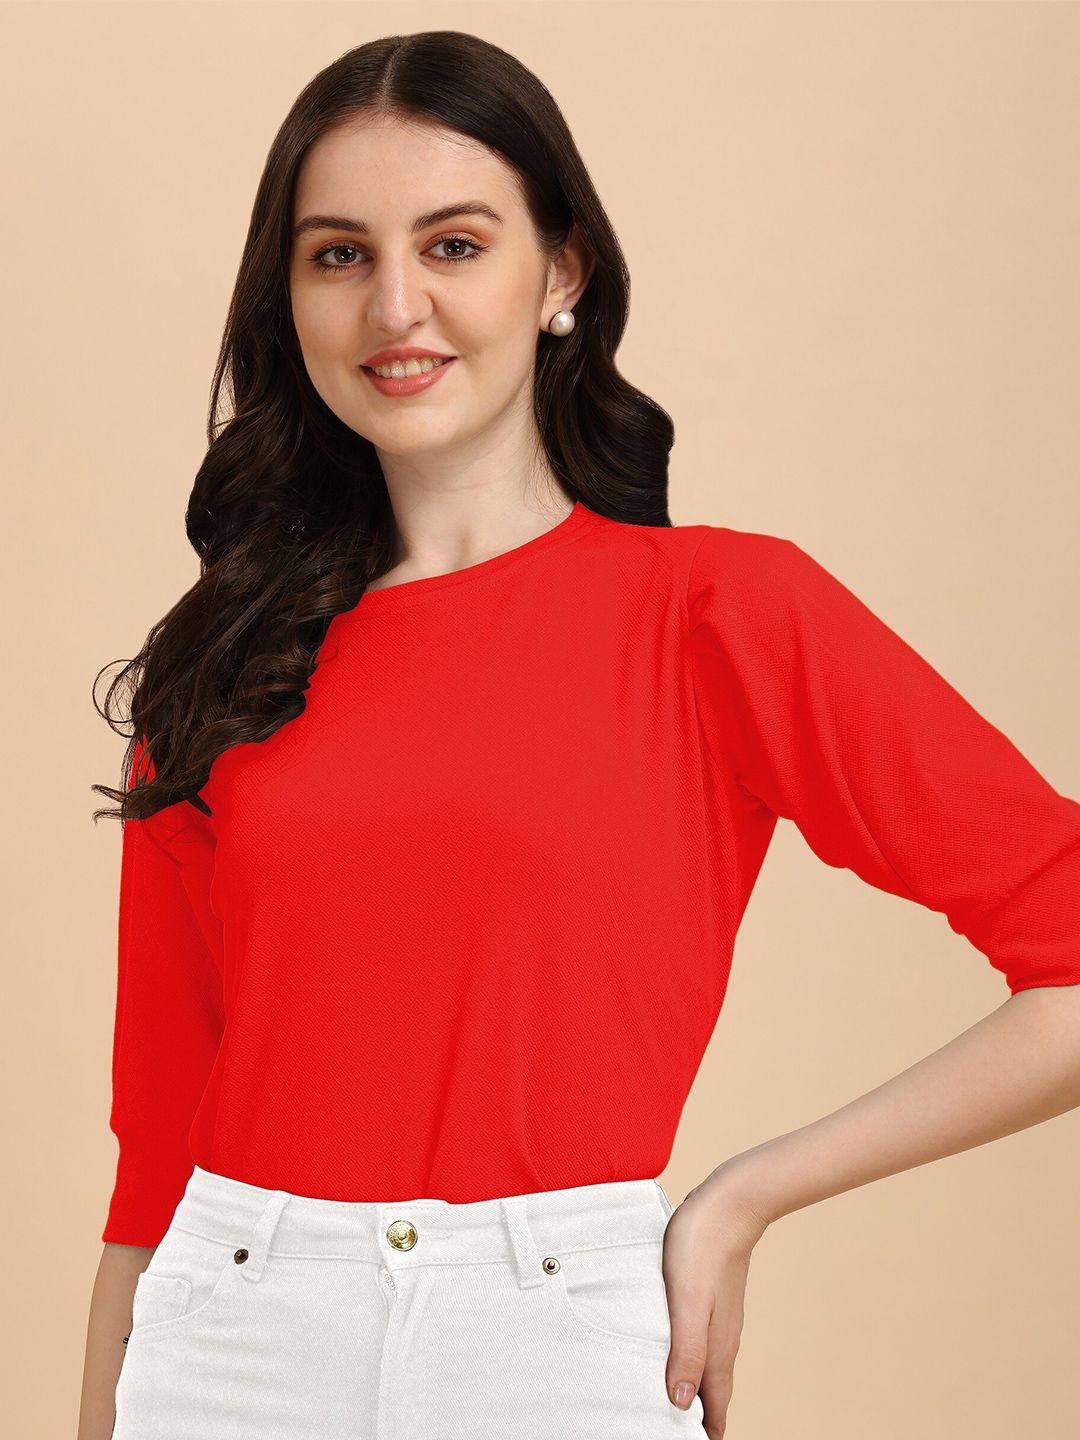 wedani red short sleeve solid top